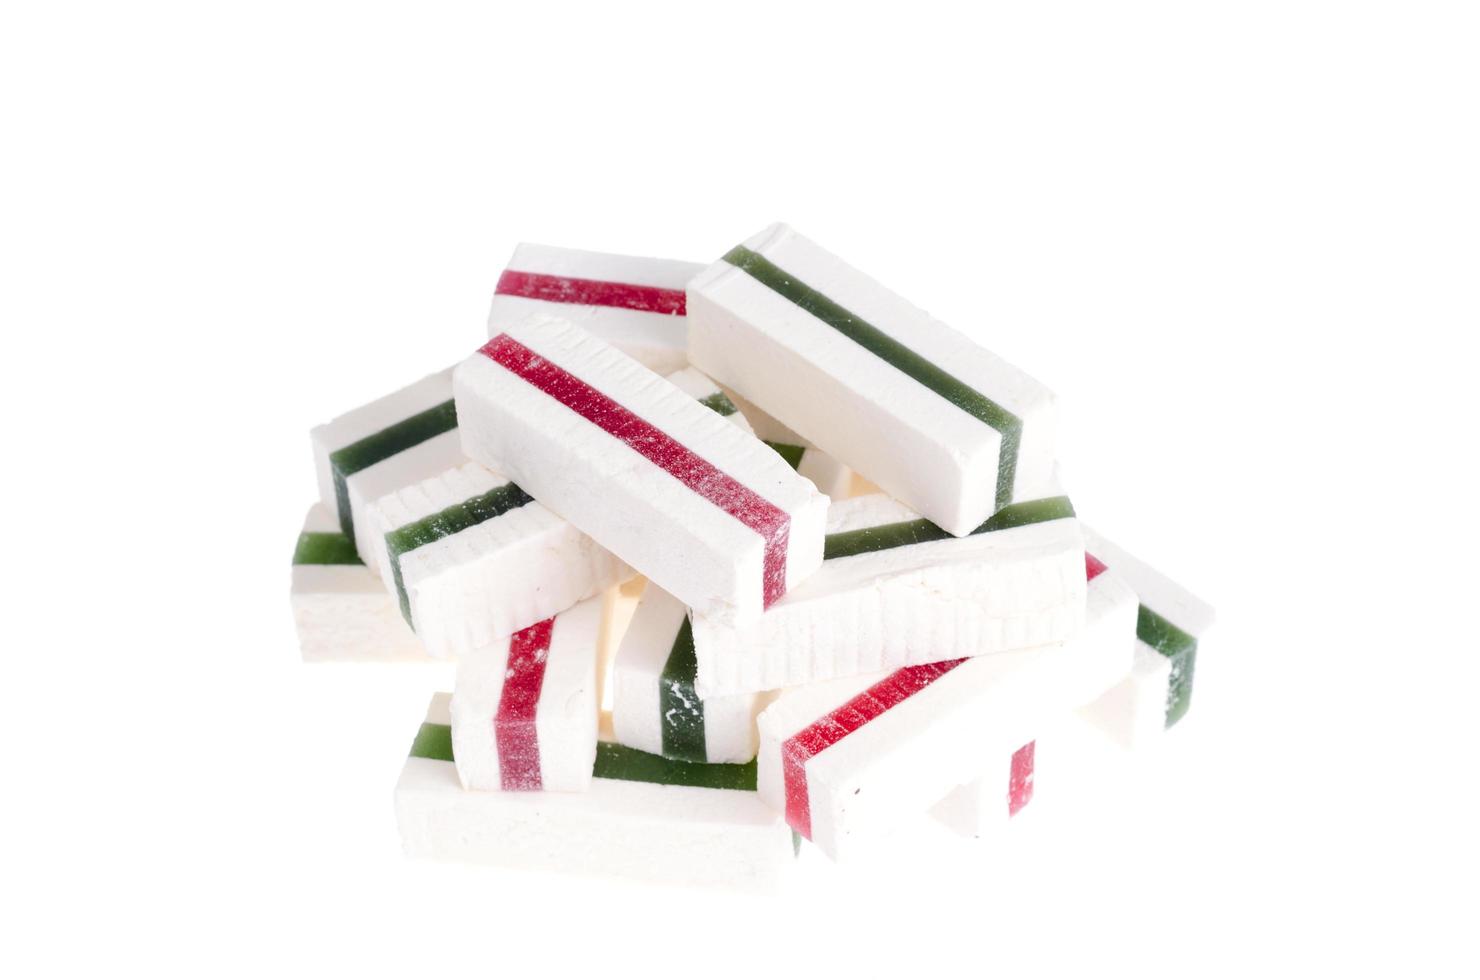 zelfgemaakte marshmallowrepen vanille. foto